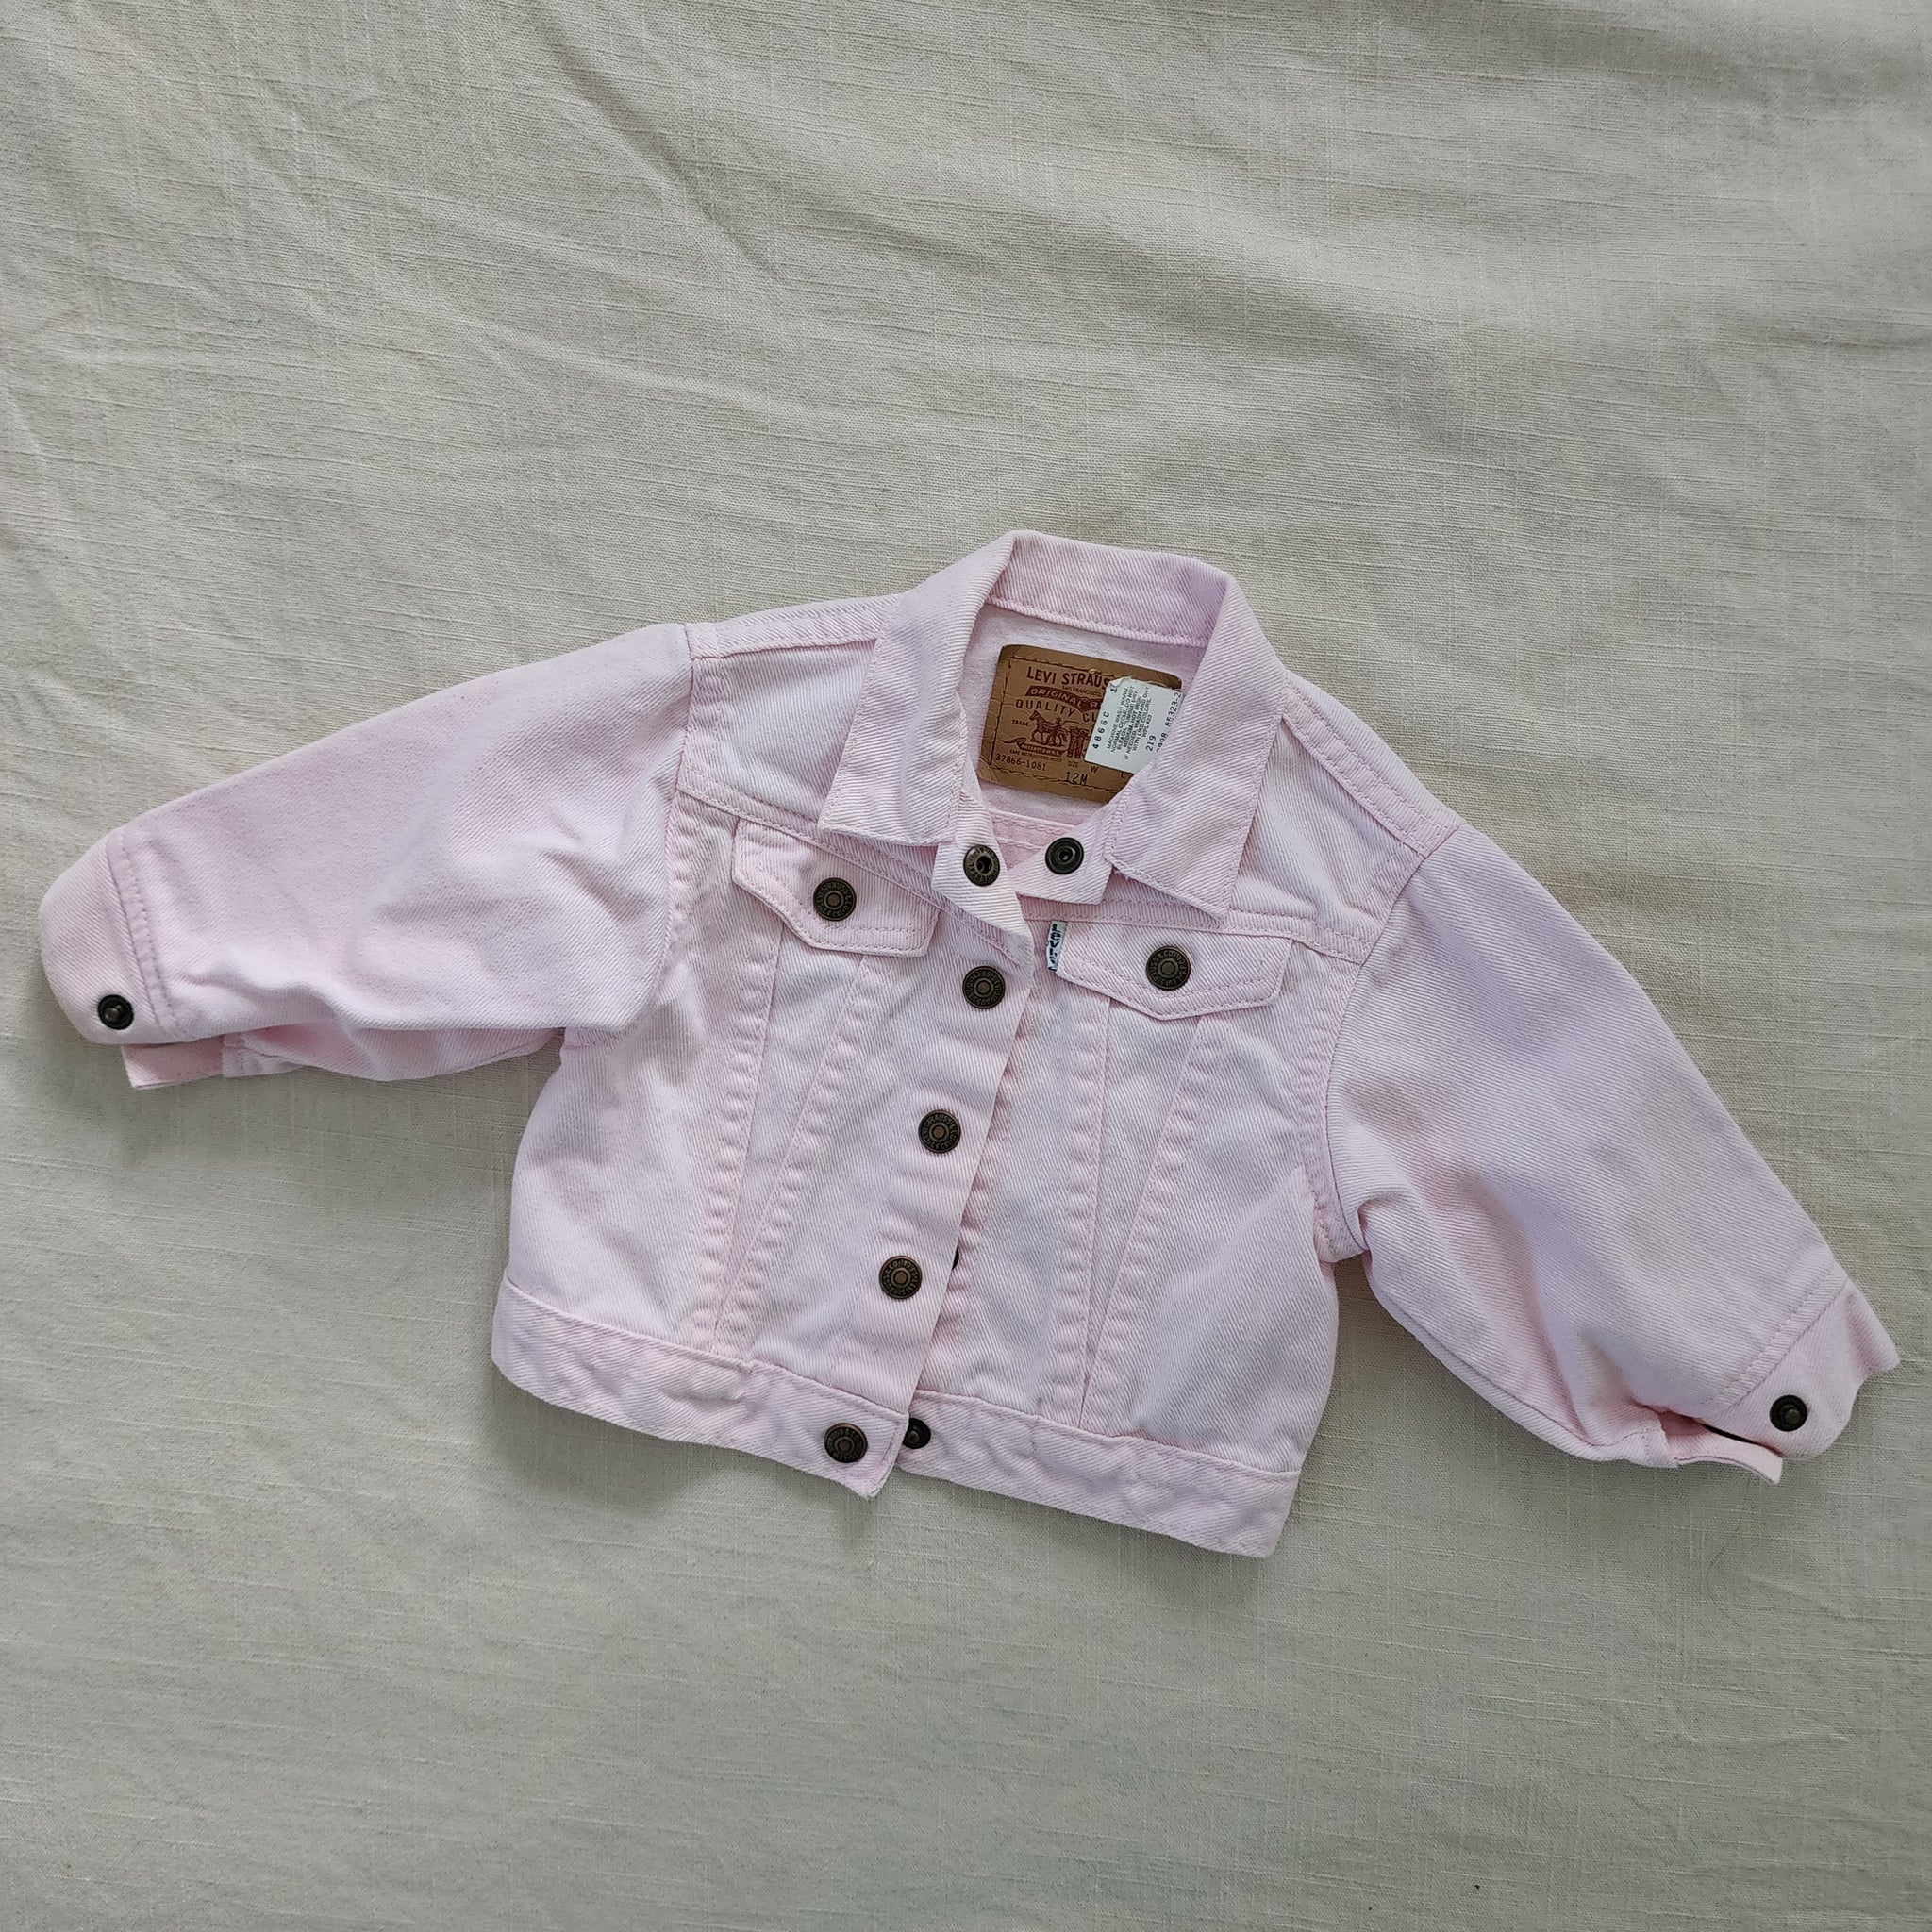 Vintage Levi’s jean jacket